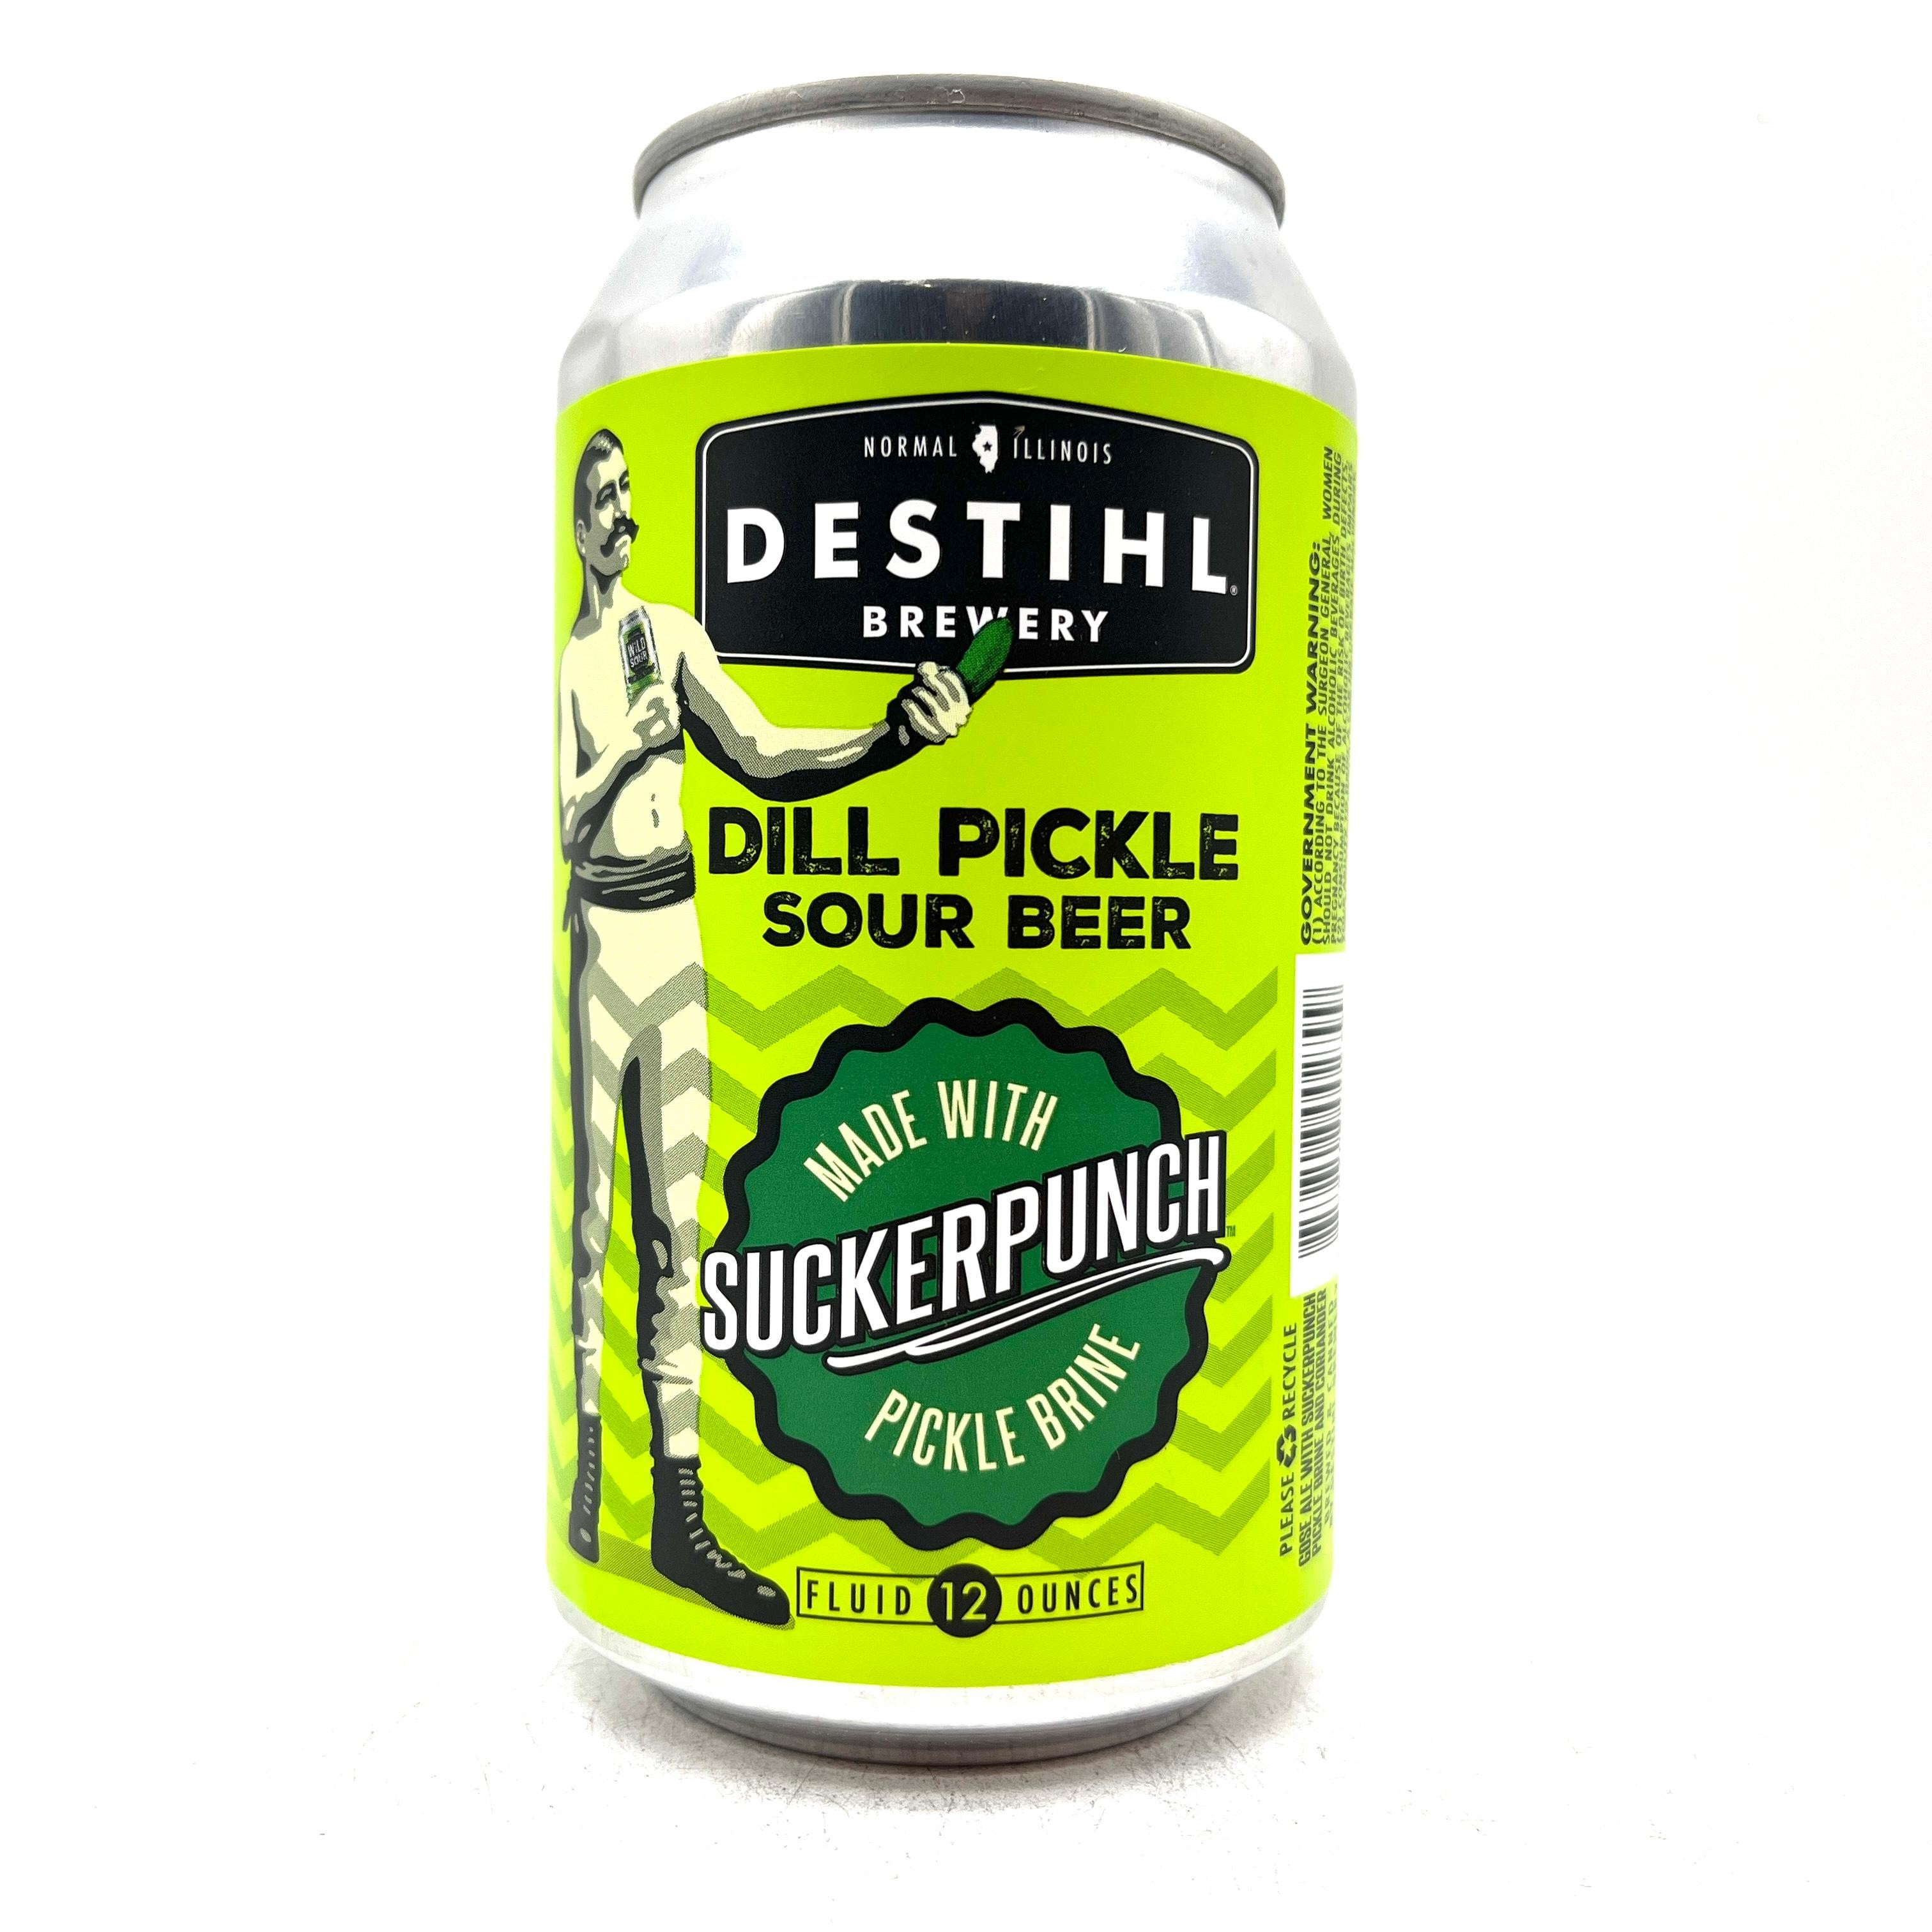 Destihl - Dill Pickle Sour Beer: SuckerPunch